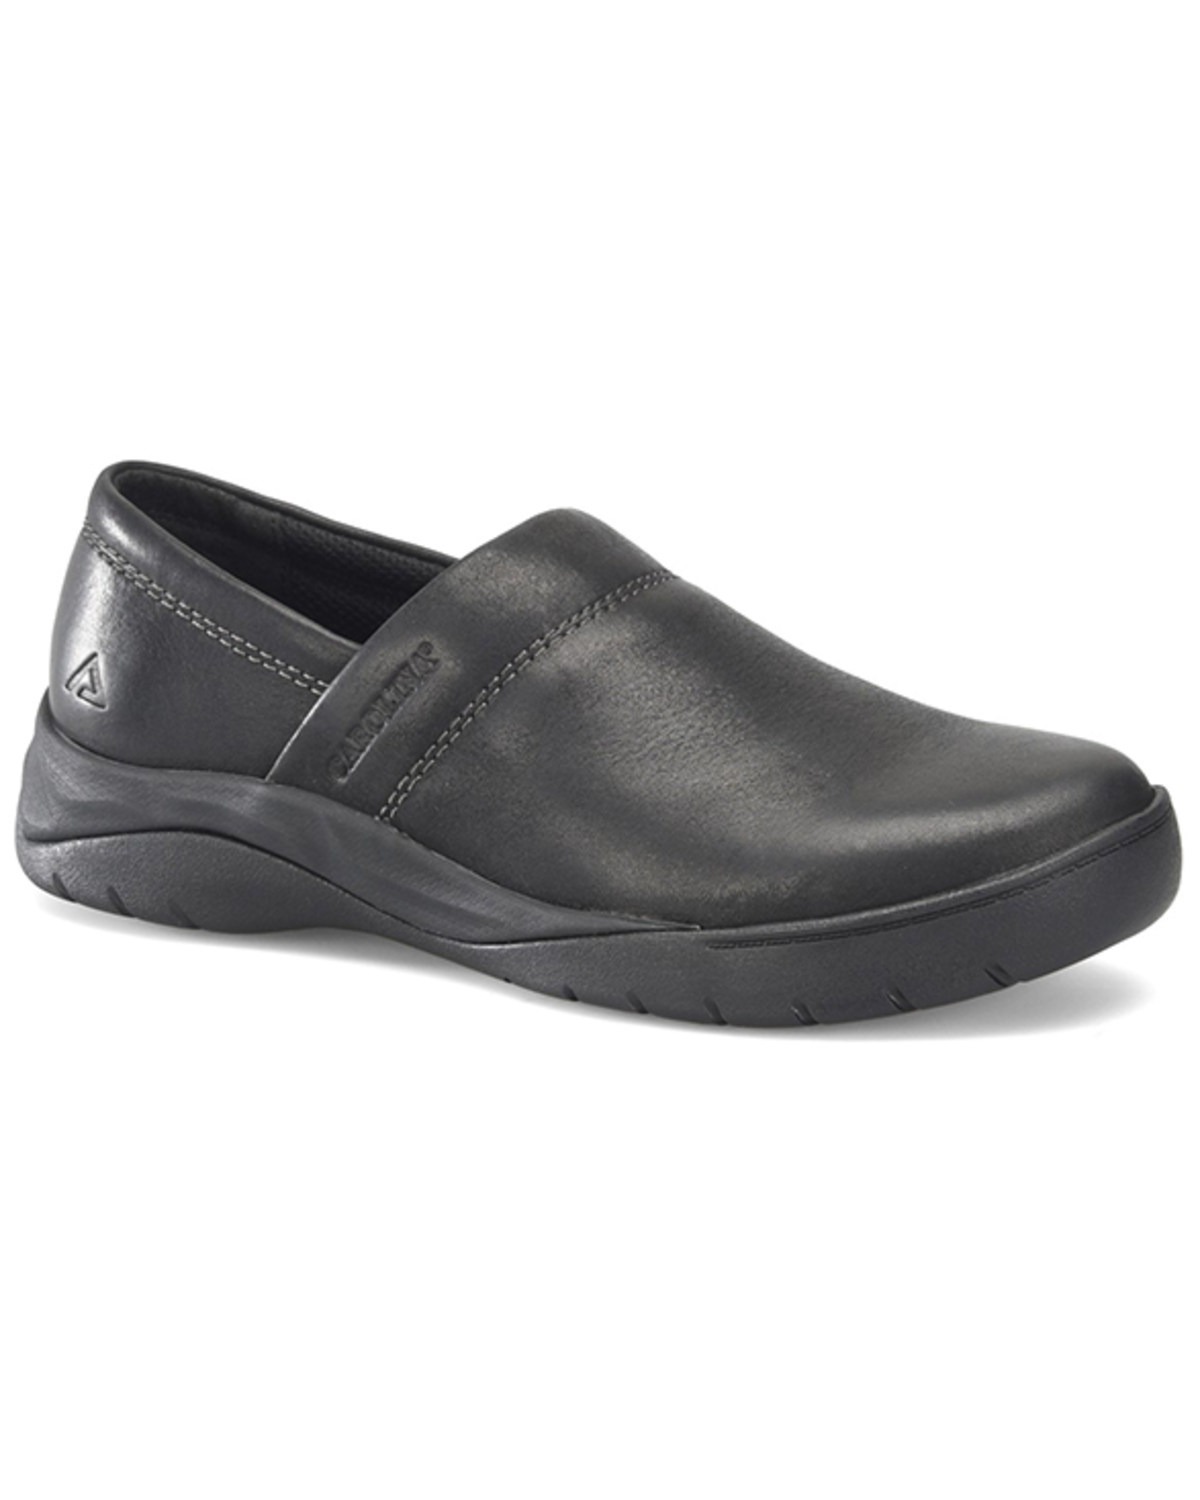 Carolina Women's Align Talux 2" Slip-On Soft Work Clog Shoes